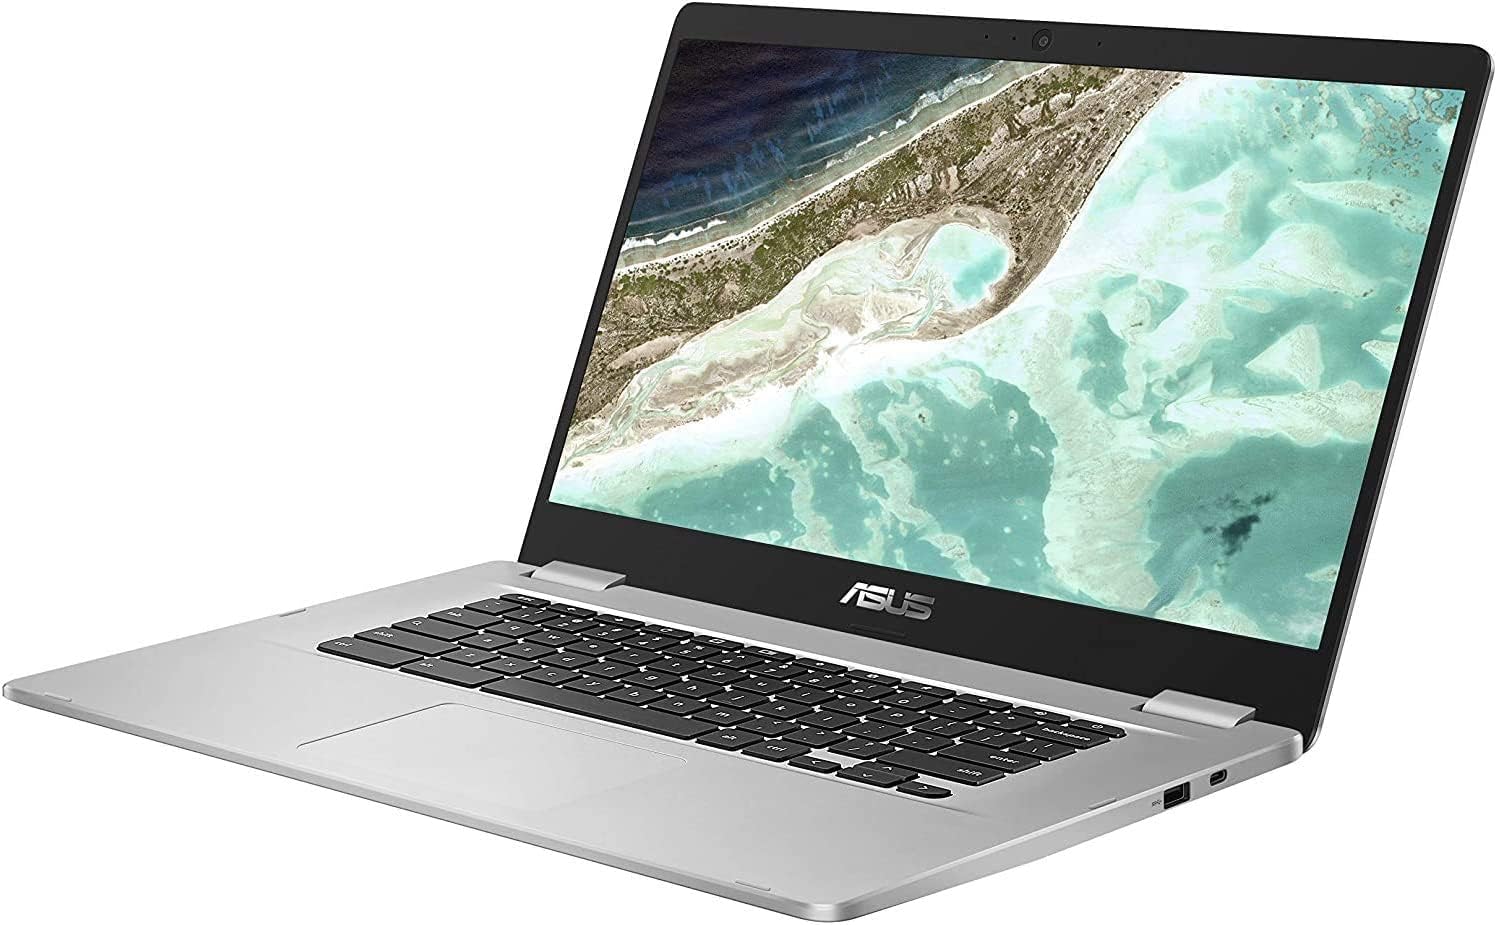 Asus C523NA Chromebook 15.6 HD Laptop, Intel Celeron N3350 Processor, 4GB RAM, 64GB eMMC Flash Memory, Intel HD Graphics, HD Webcam, Stereo Speakers, Chrome OS, Silver, (renewed)